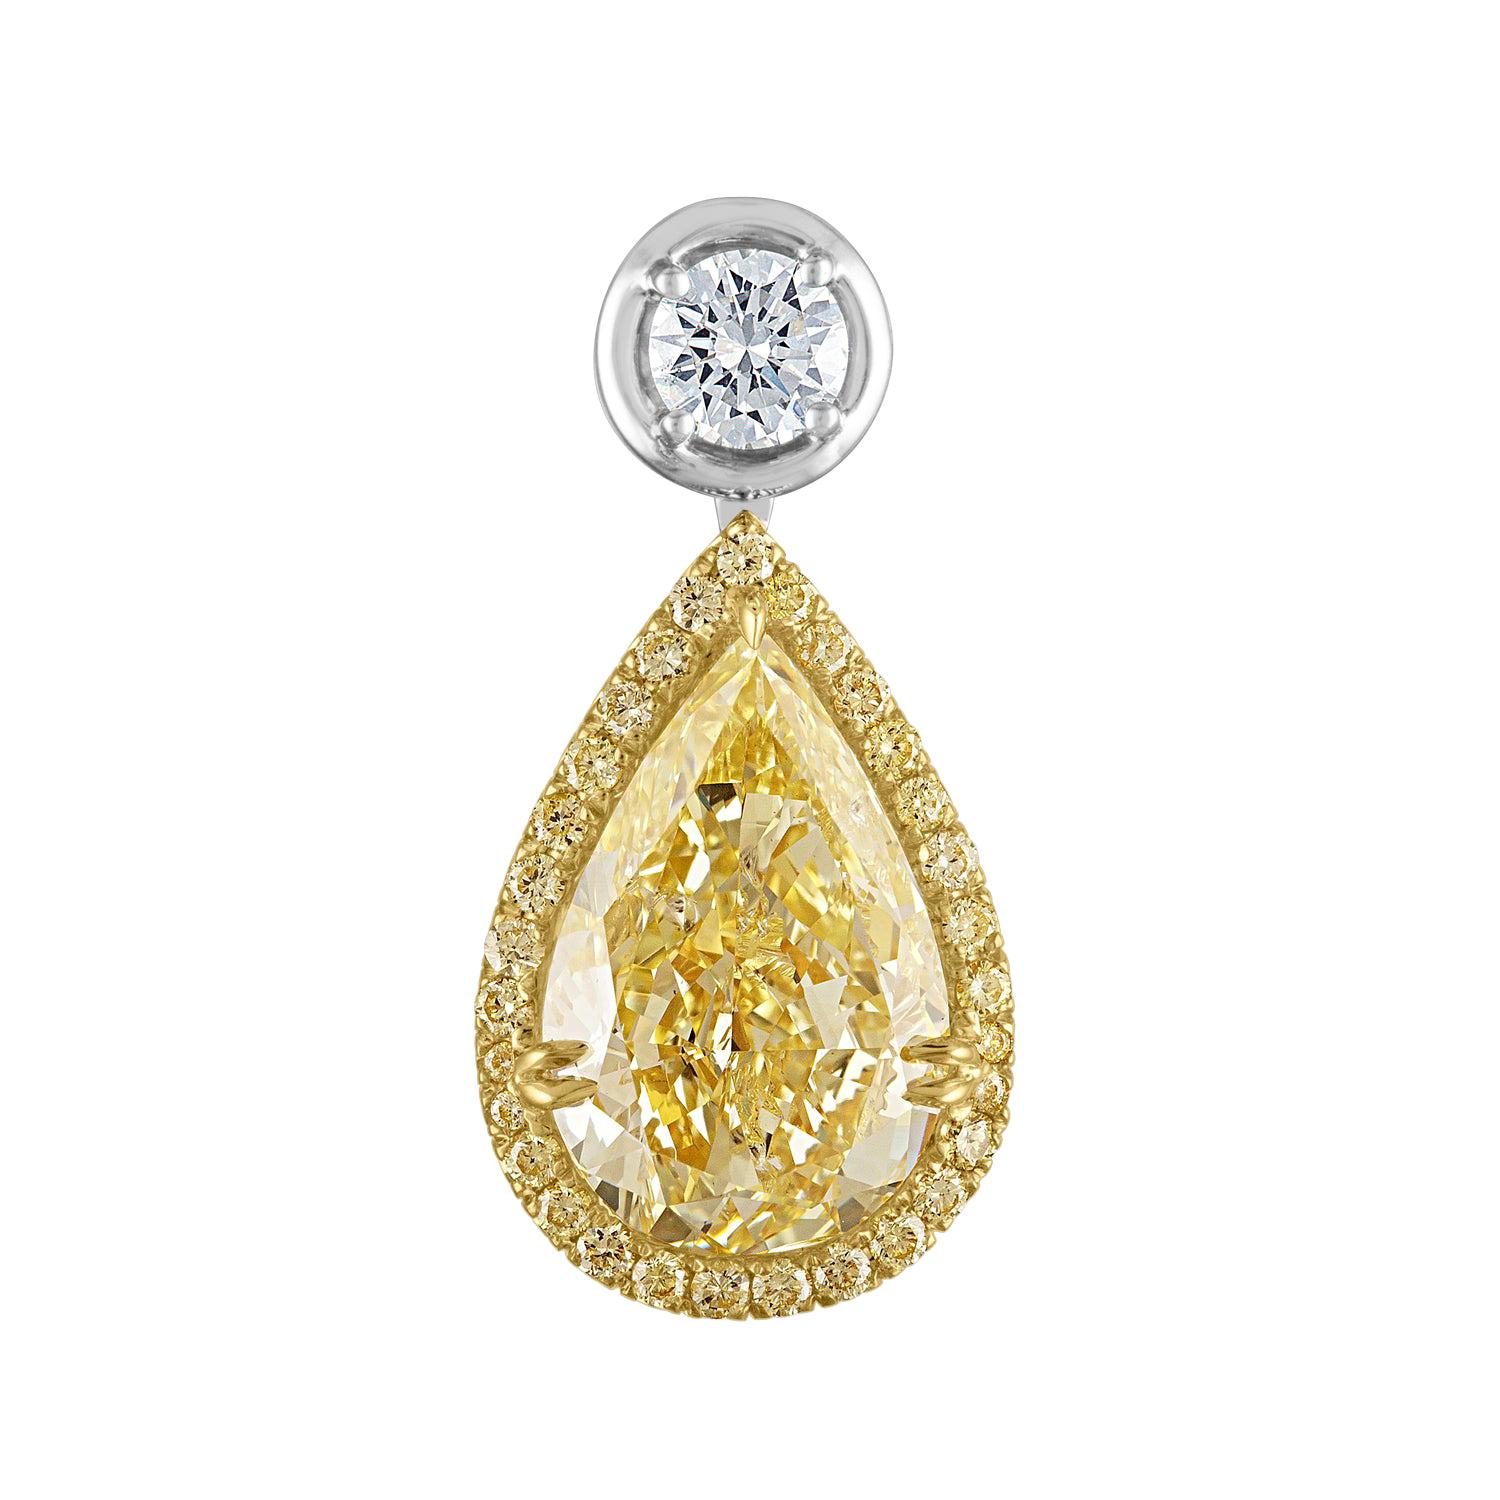 GIA Certified 8.19 Carat Pear Shape Yellow Diamond in Two-Tone Mounting